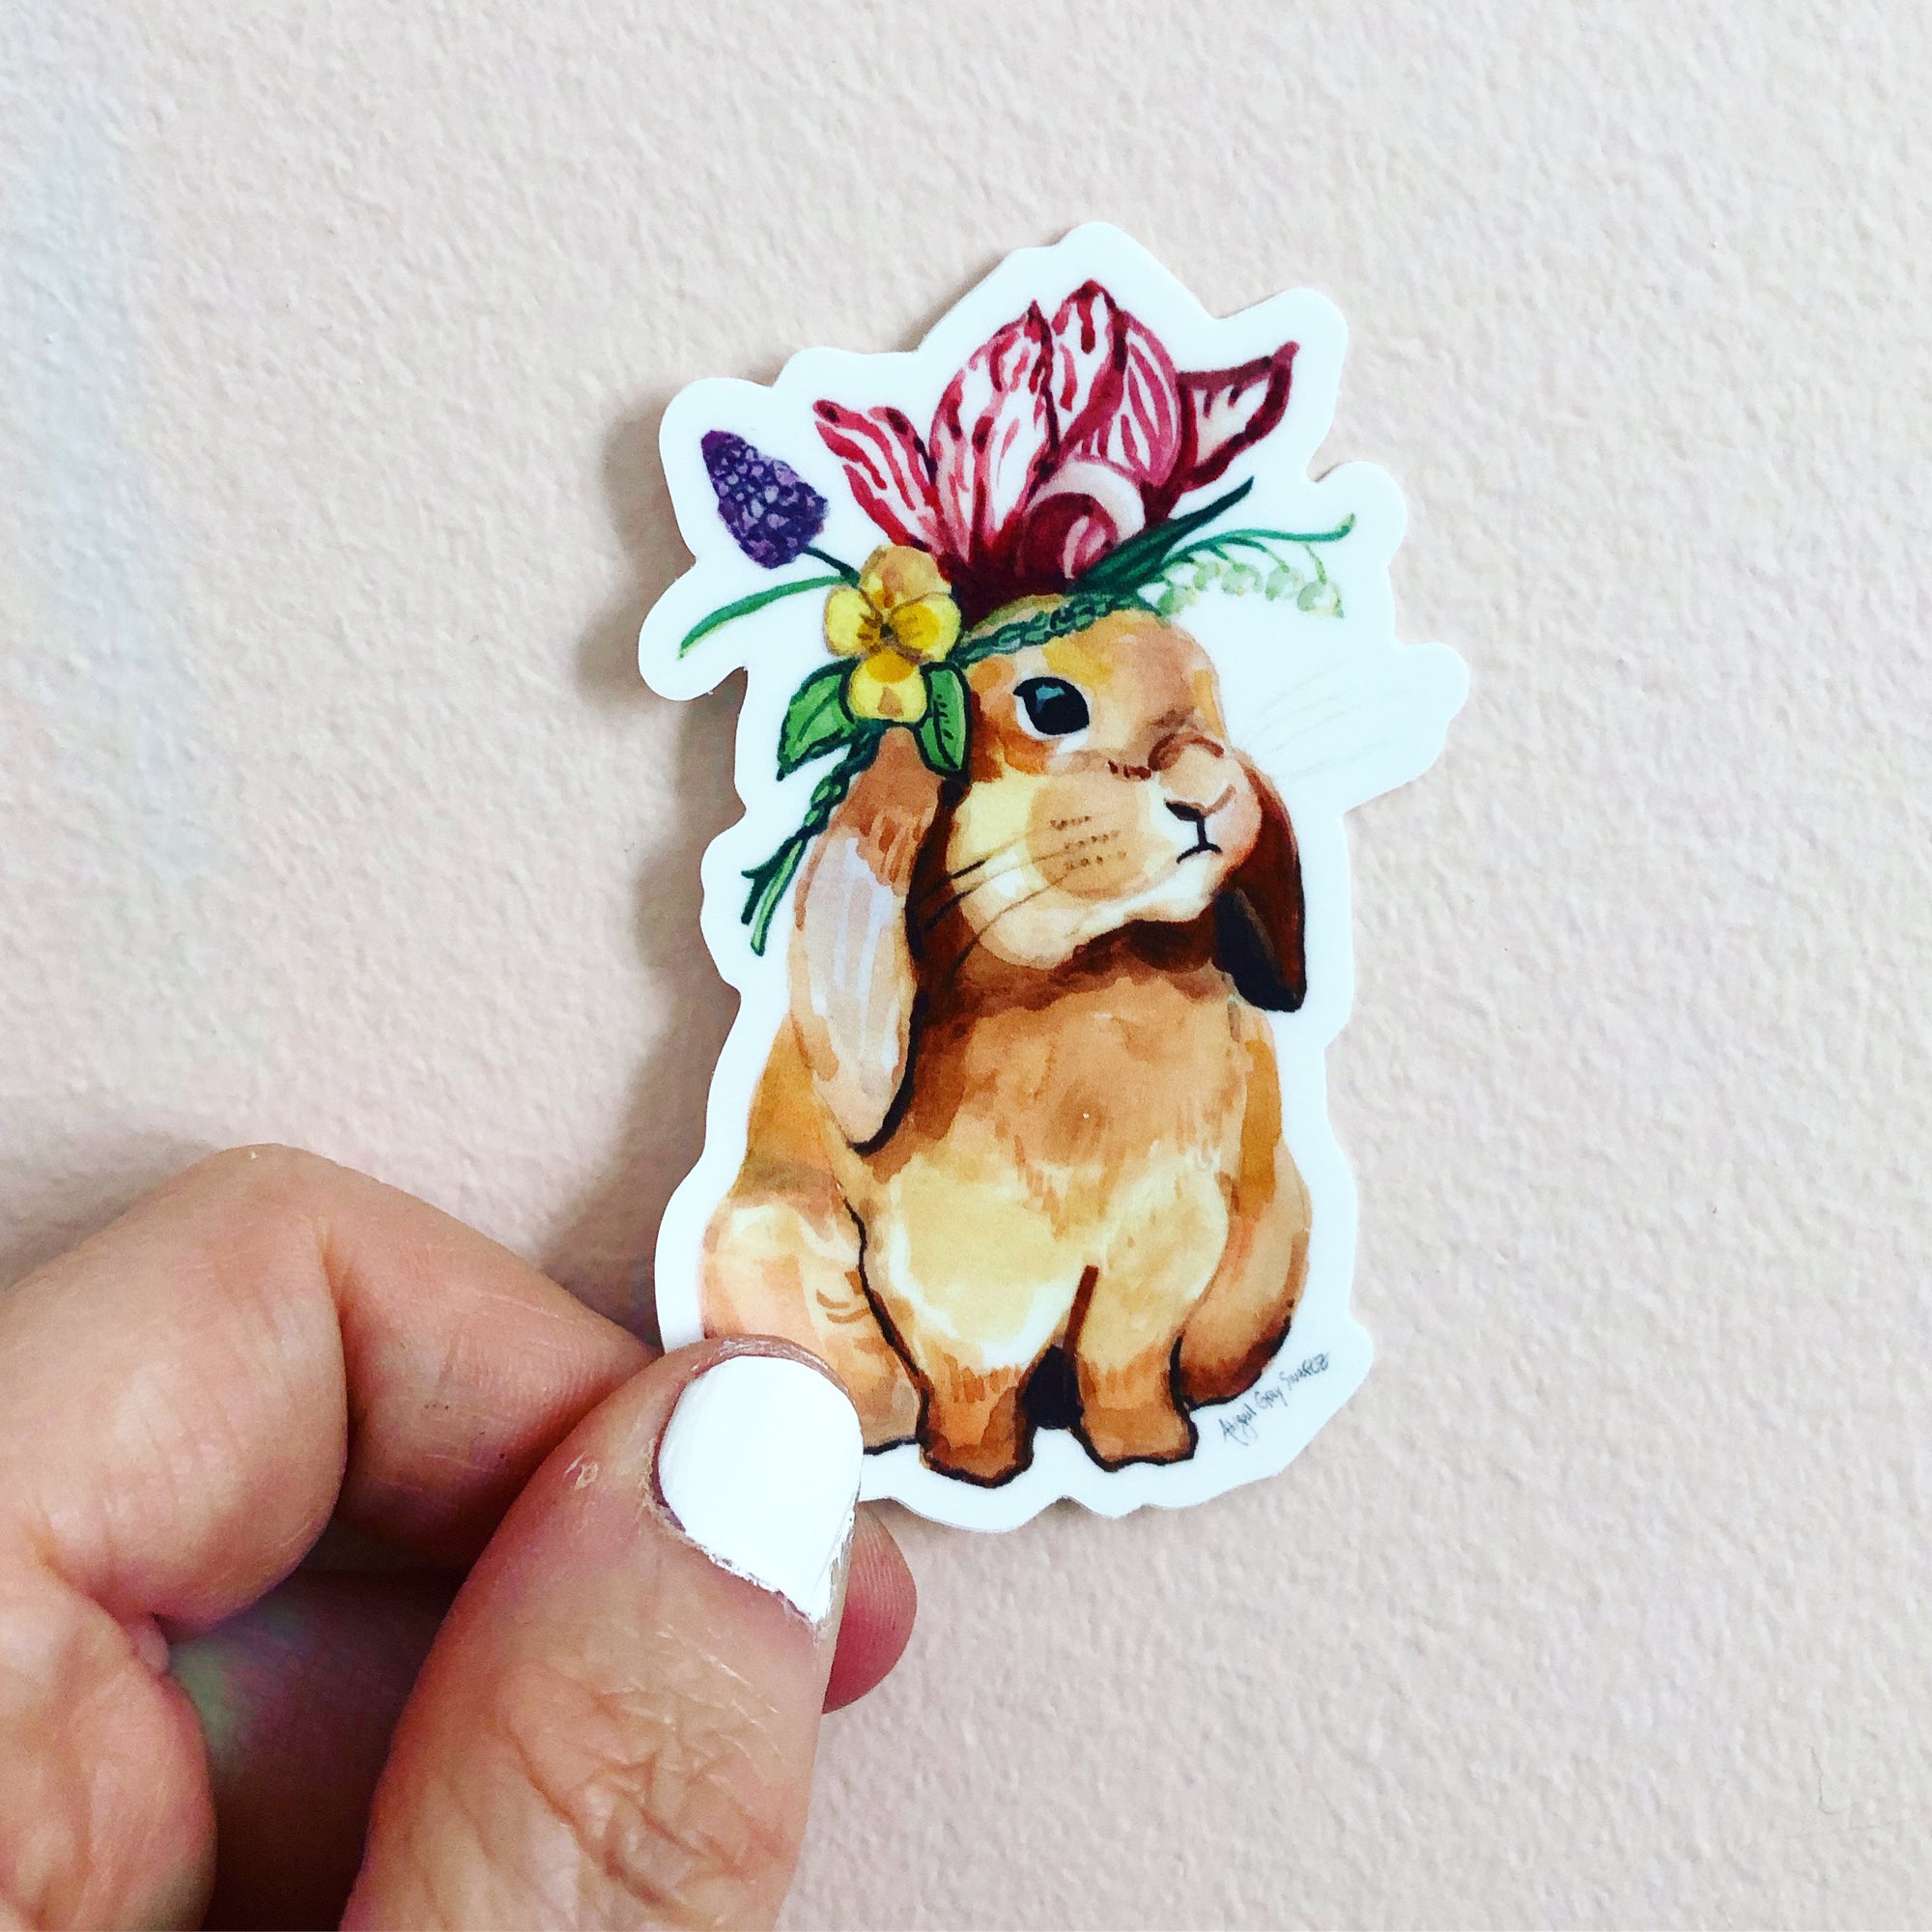 Bunny portrait sticker, rabbit in a floral corwn sticker by Abigail Gray Swartz of Gray Day Studio